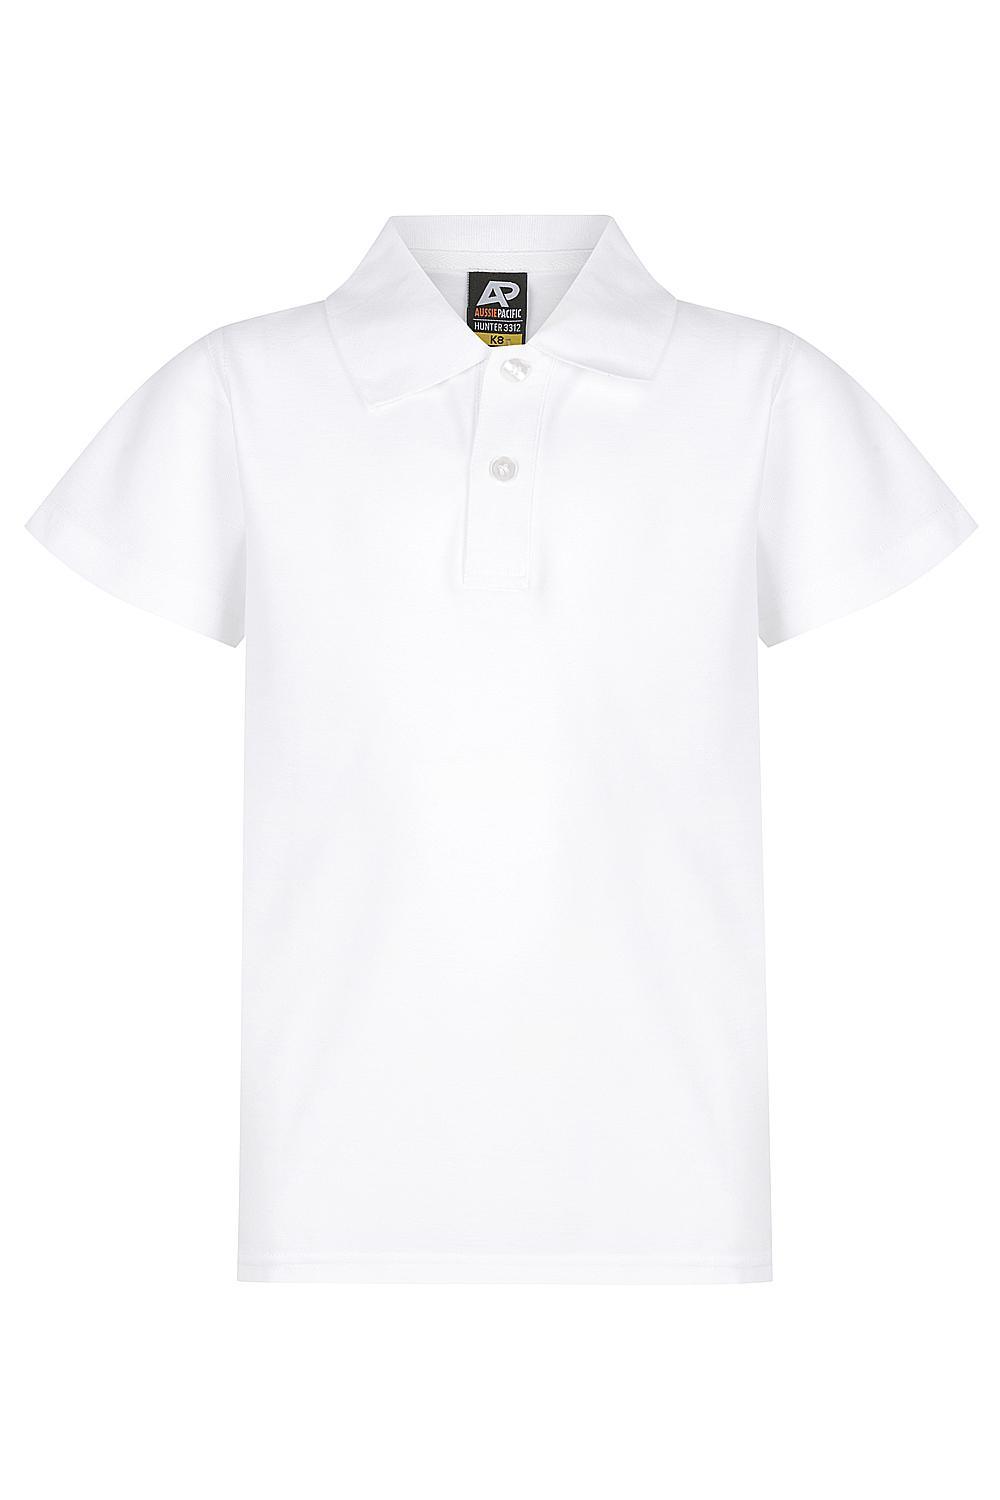 Custom Kids Hunter Shirts - White